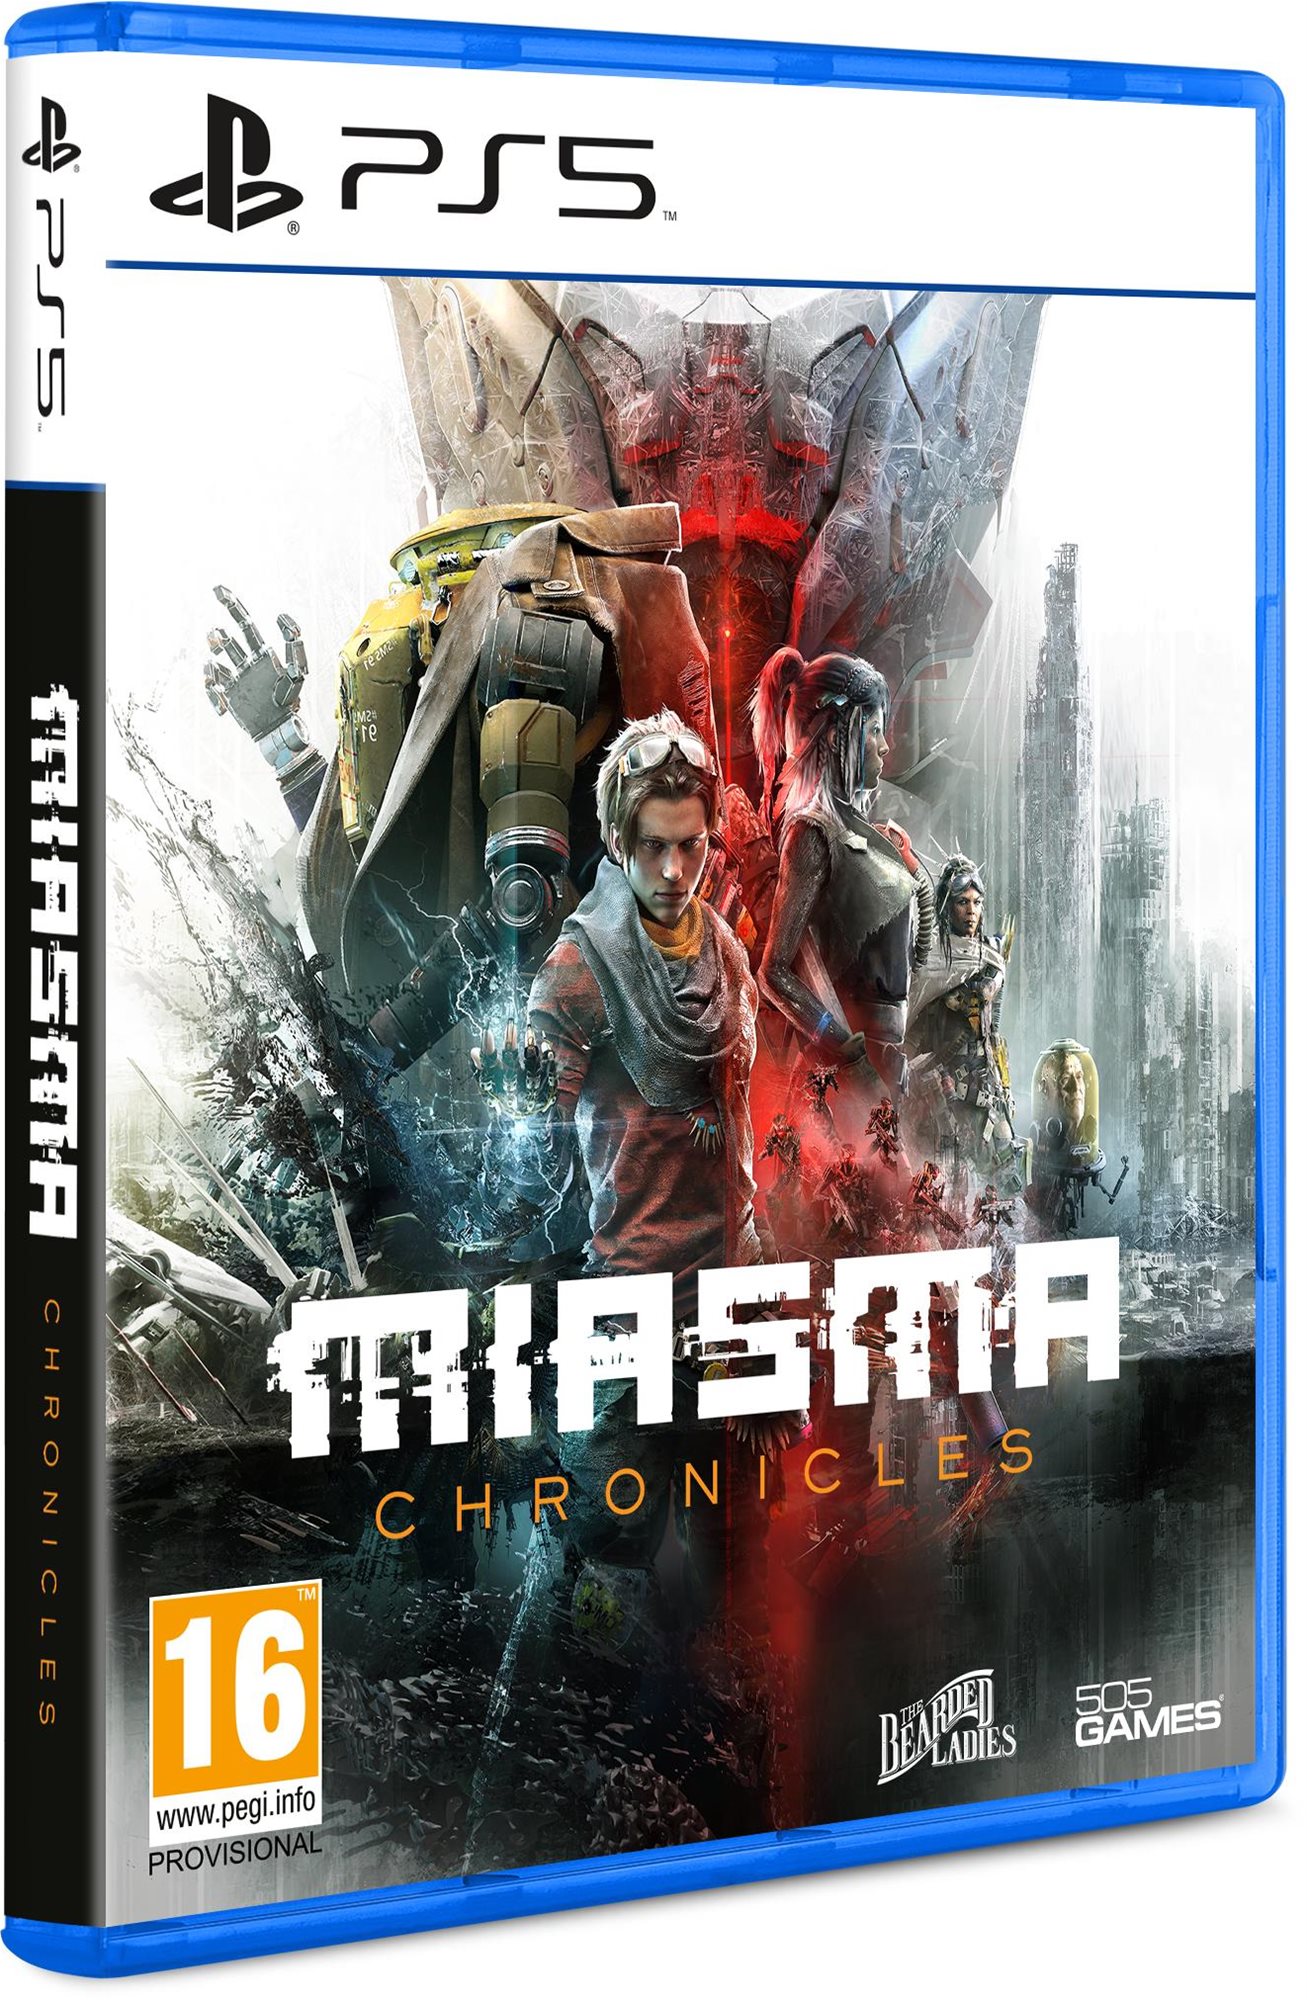 Miasma Chronicles - PS5